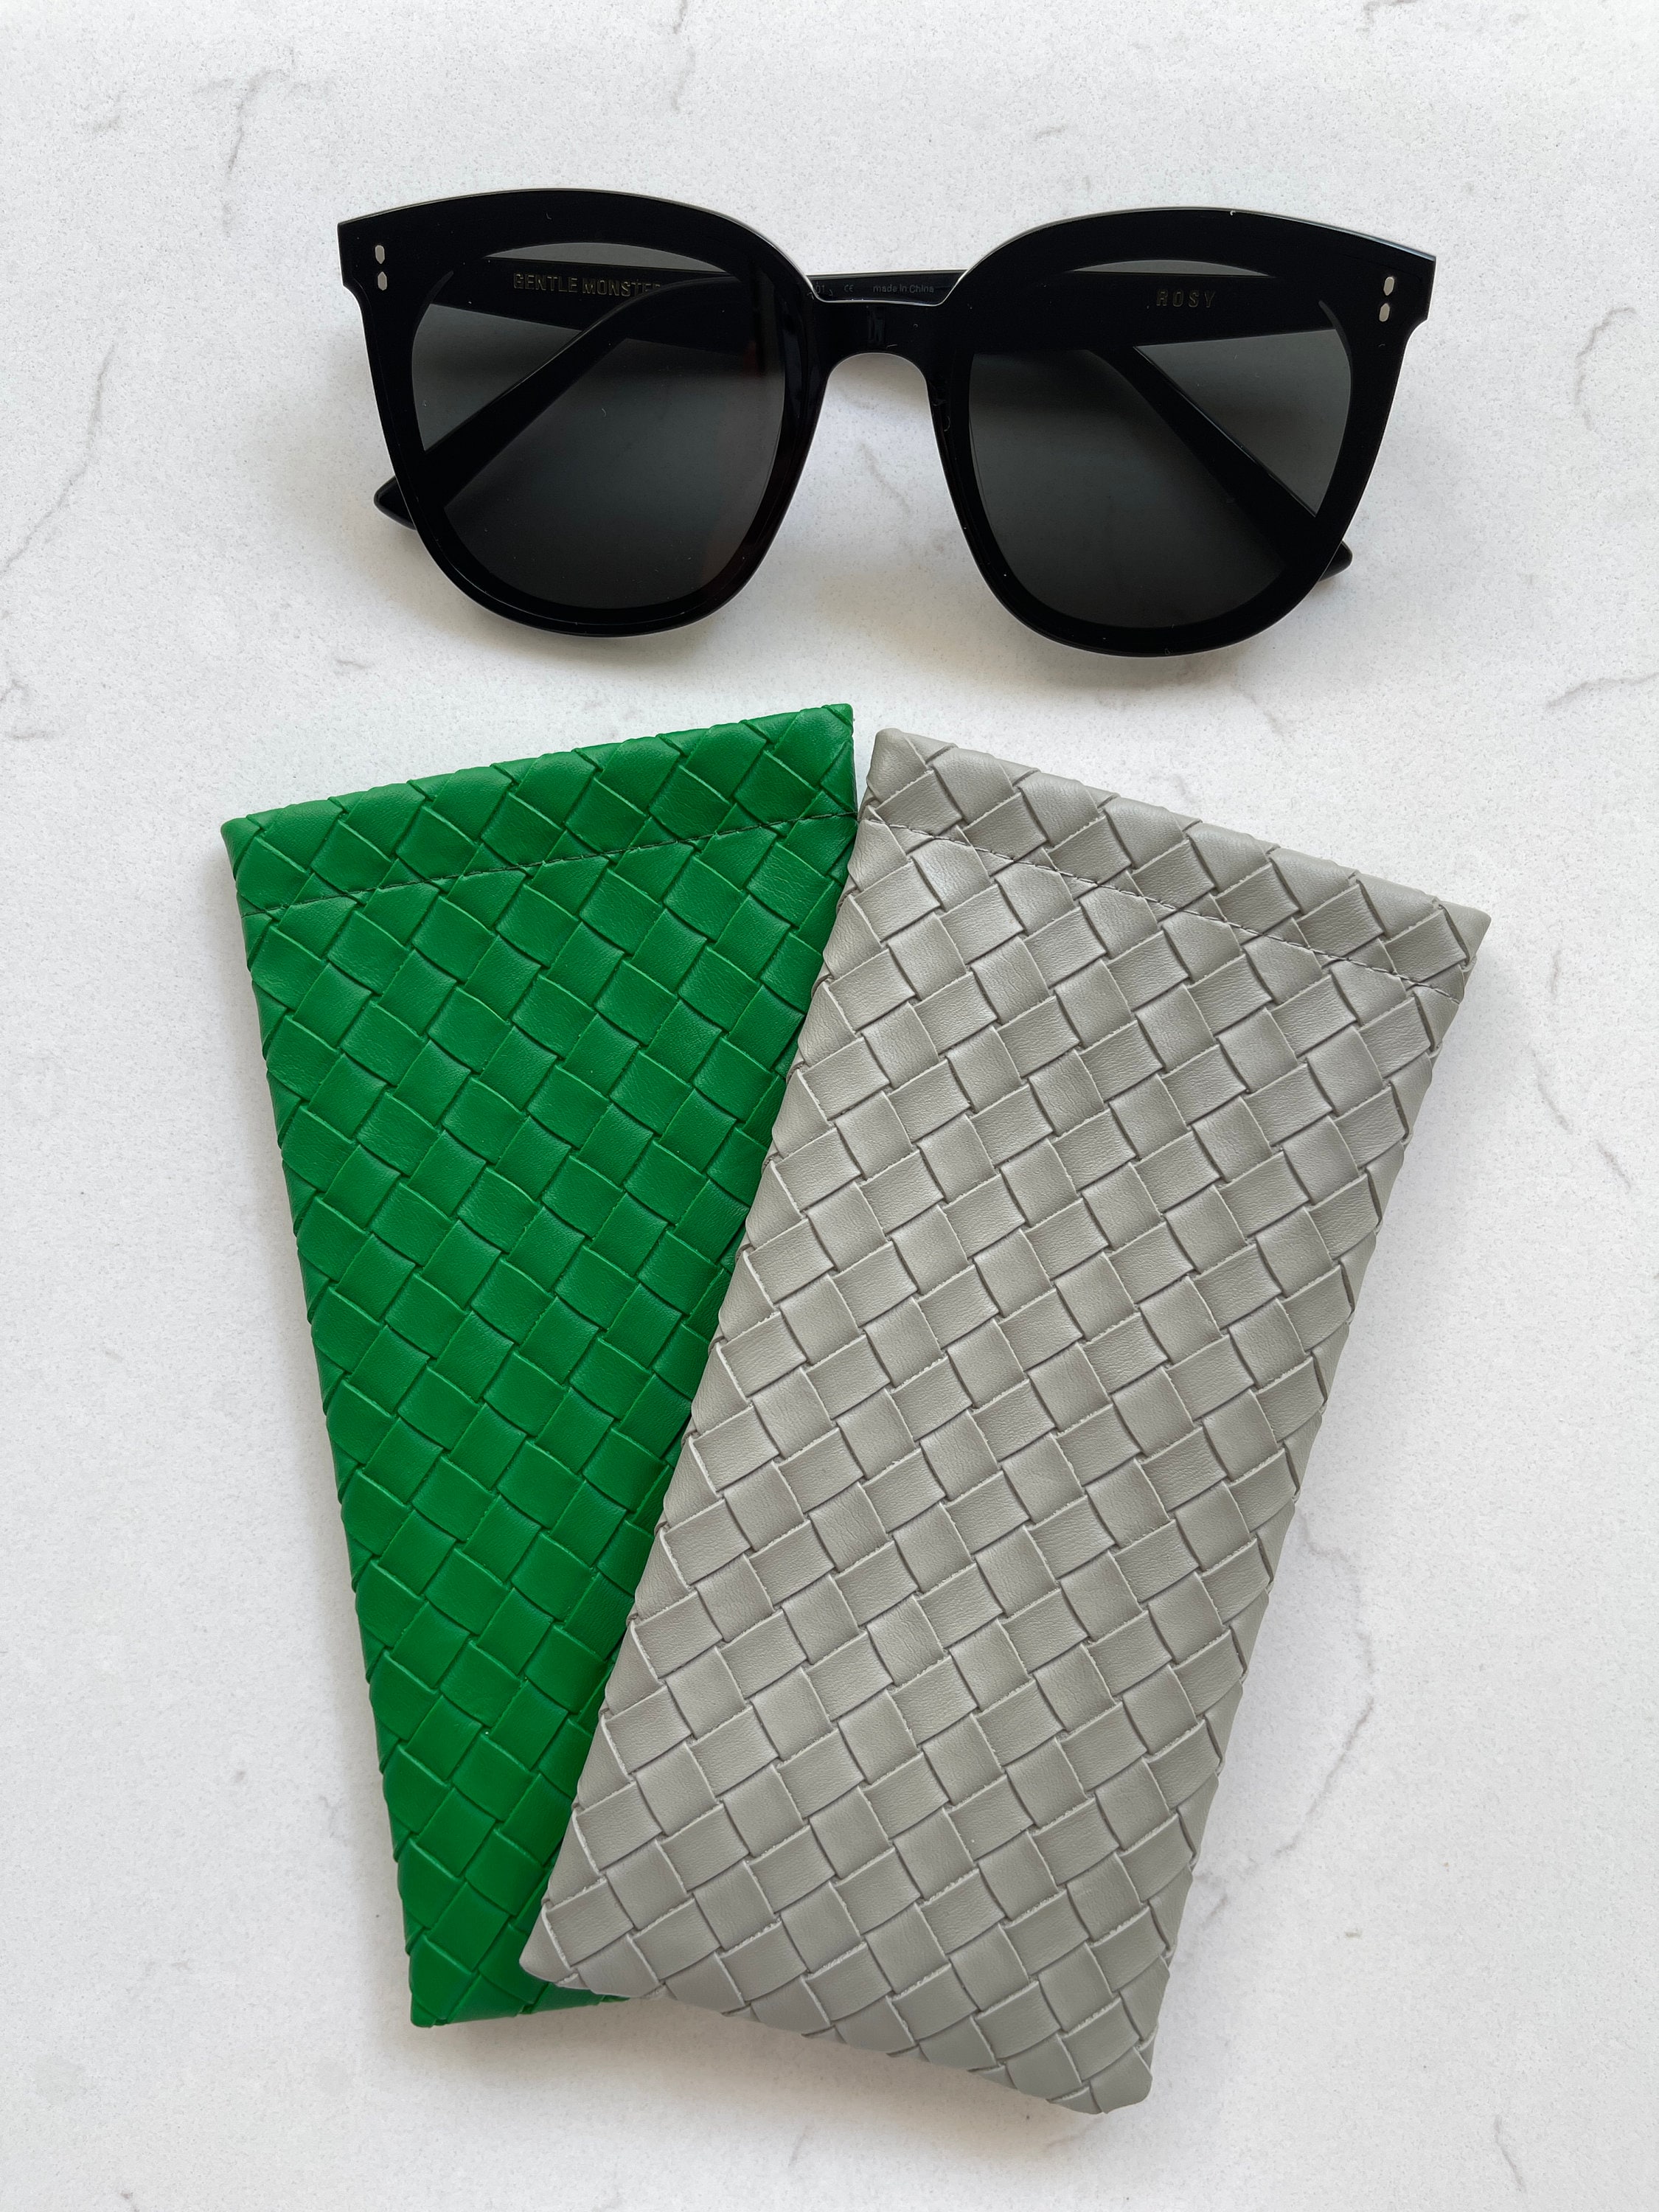 Bottega Veneta® Men's Sunglasses Case in Parakeet. Shop online now.